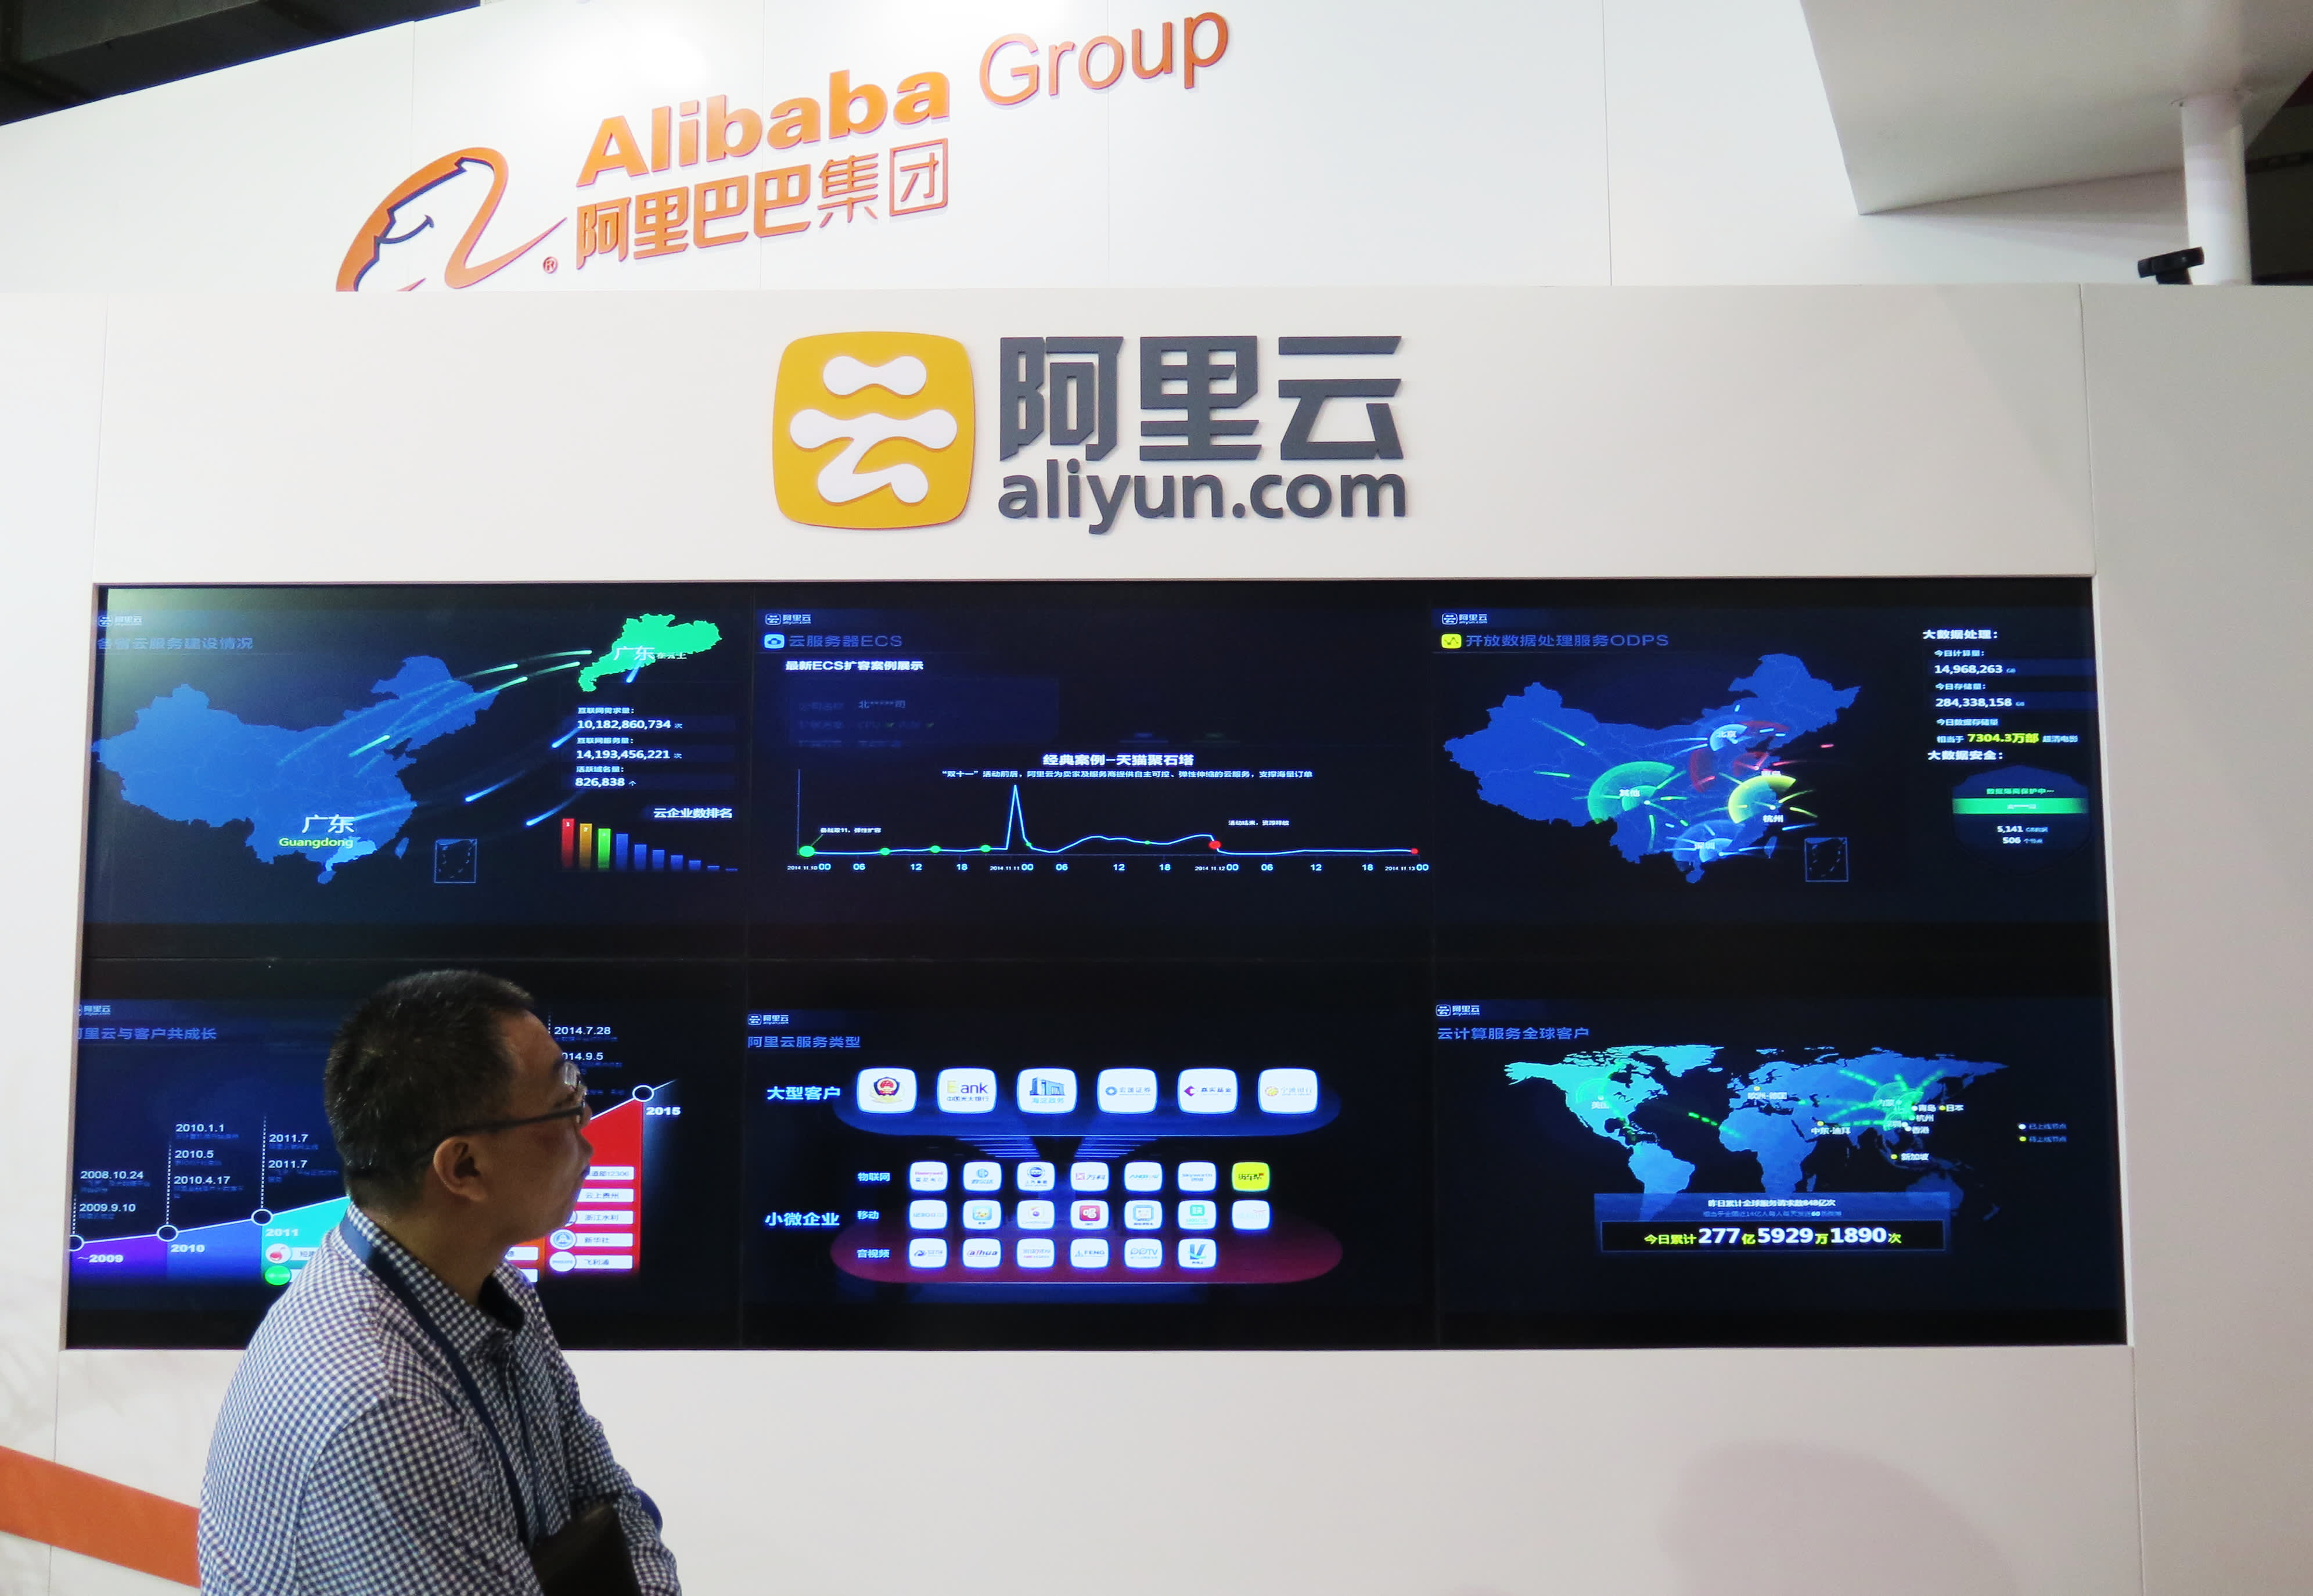 New Singapore HQ for Aliyun underpins Alibaba's cloud push